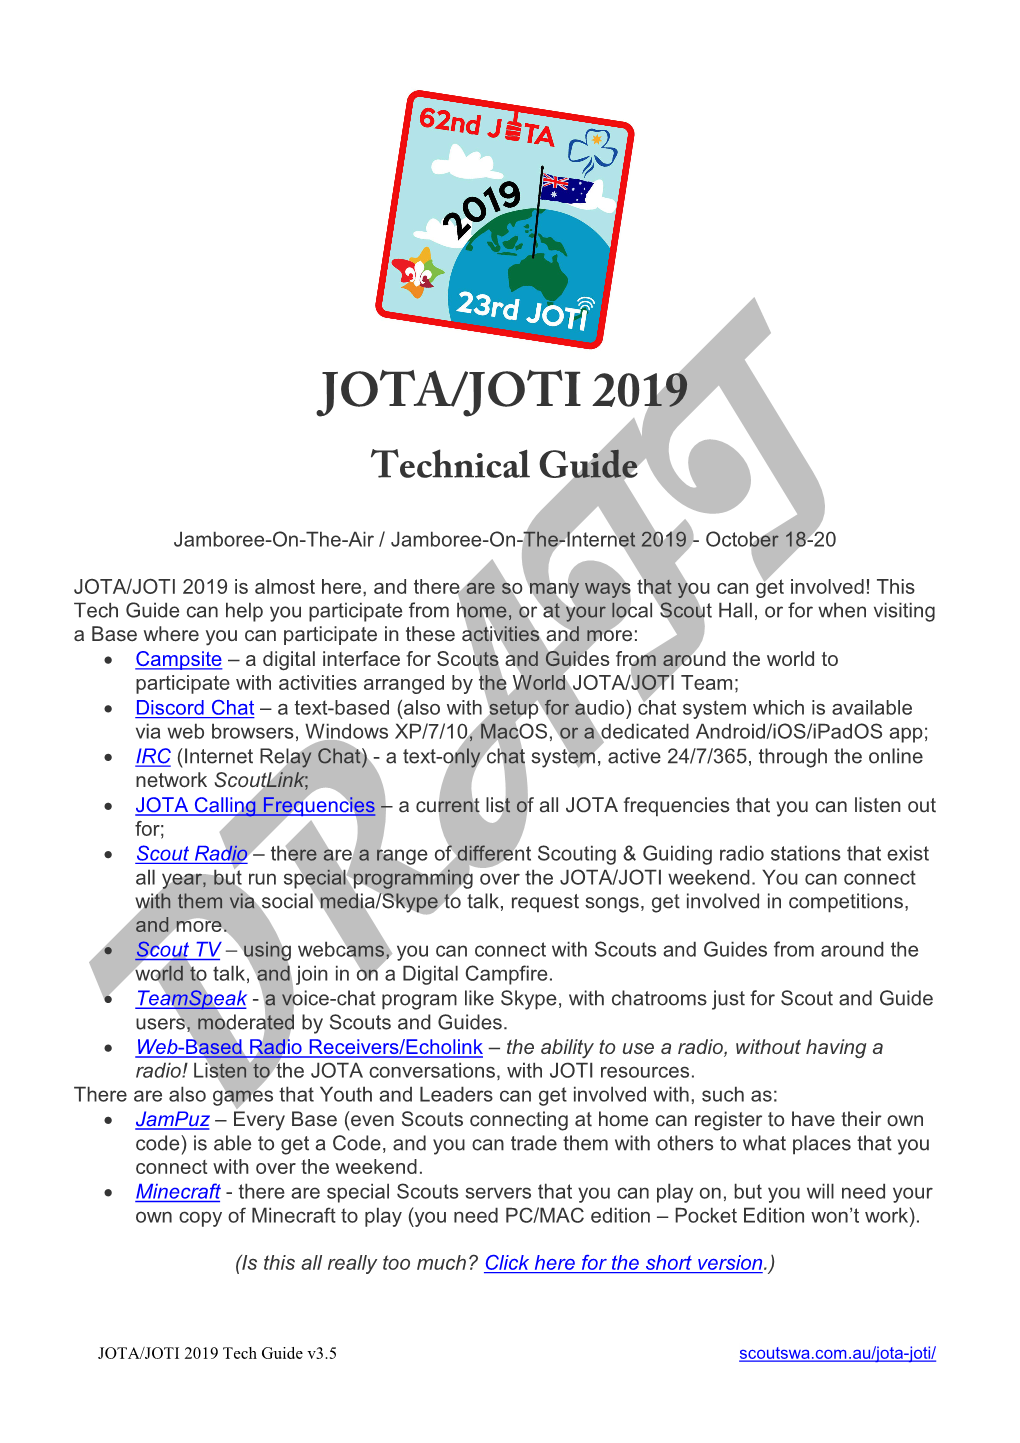 JOTA/JOTI 2019 Technical Guide